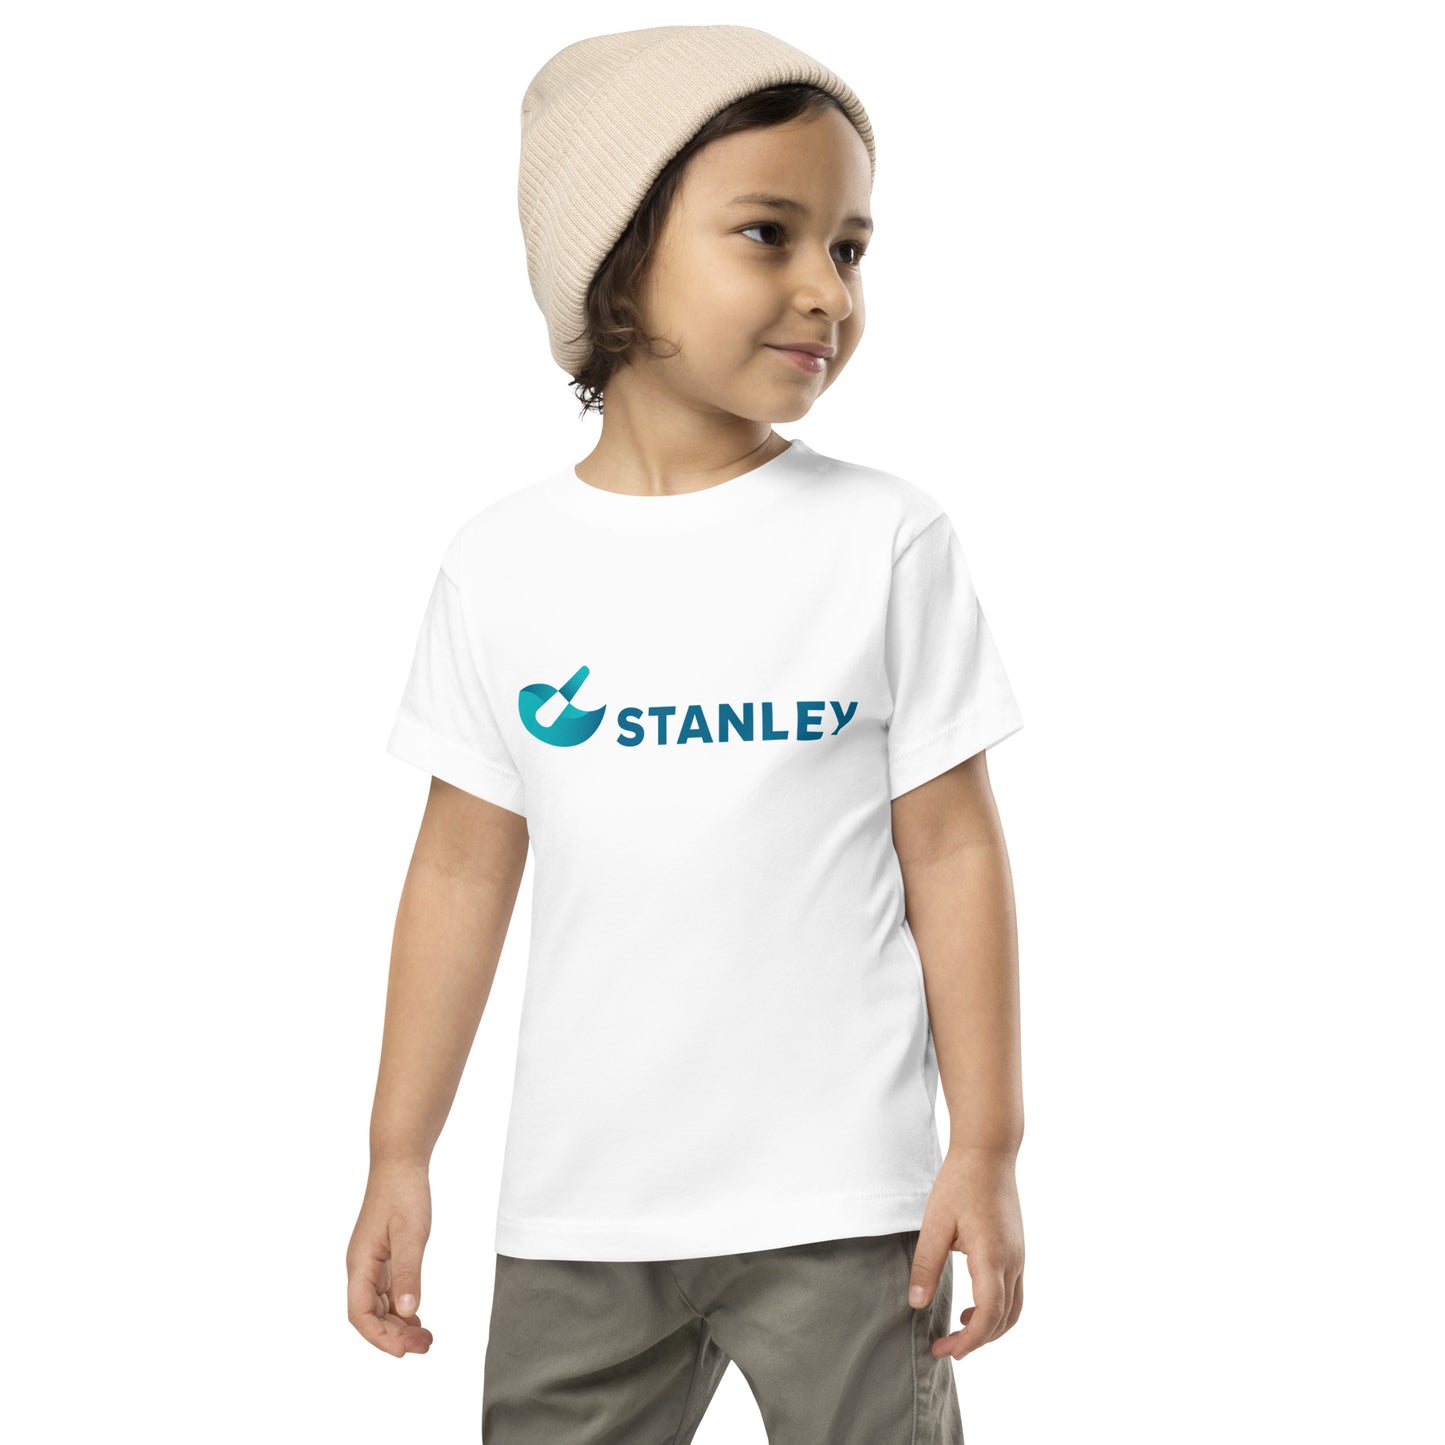 Toddler Short Sleeve Tee - Stanley